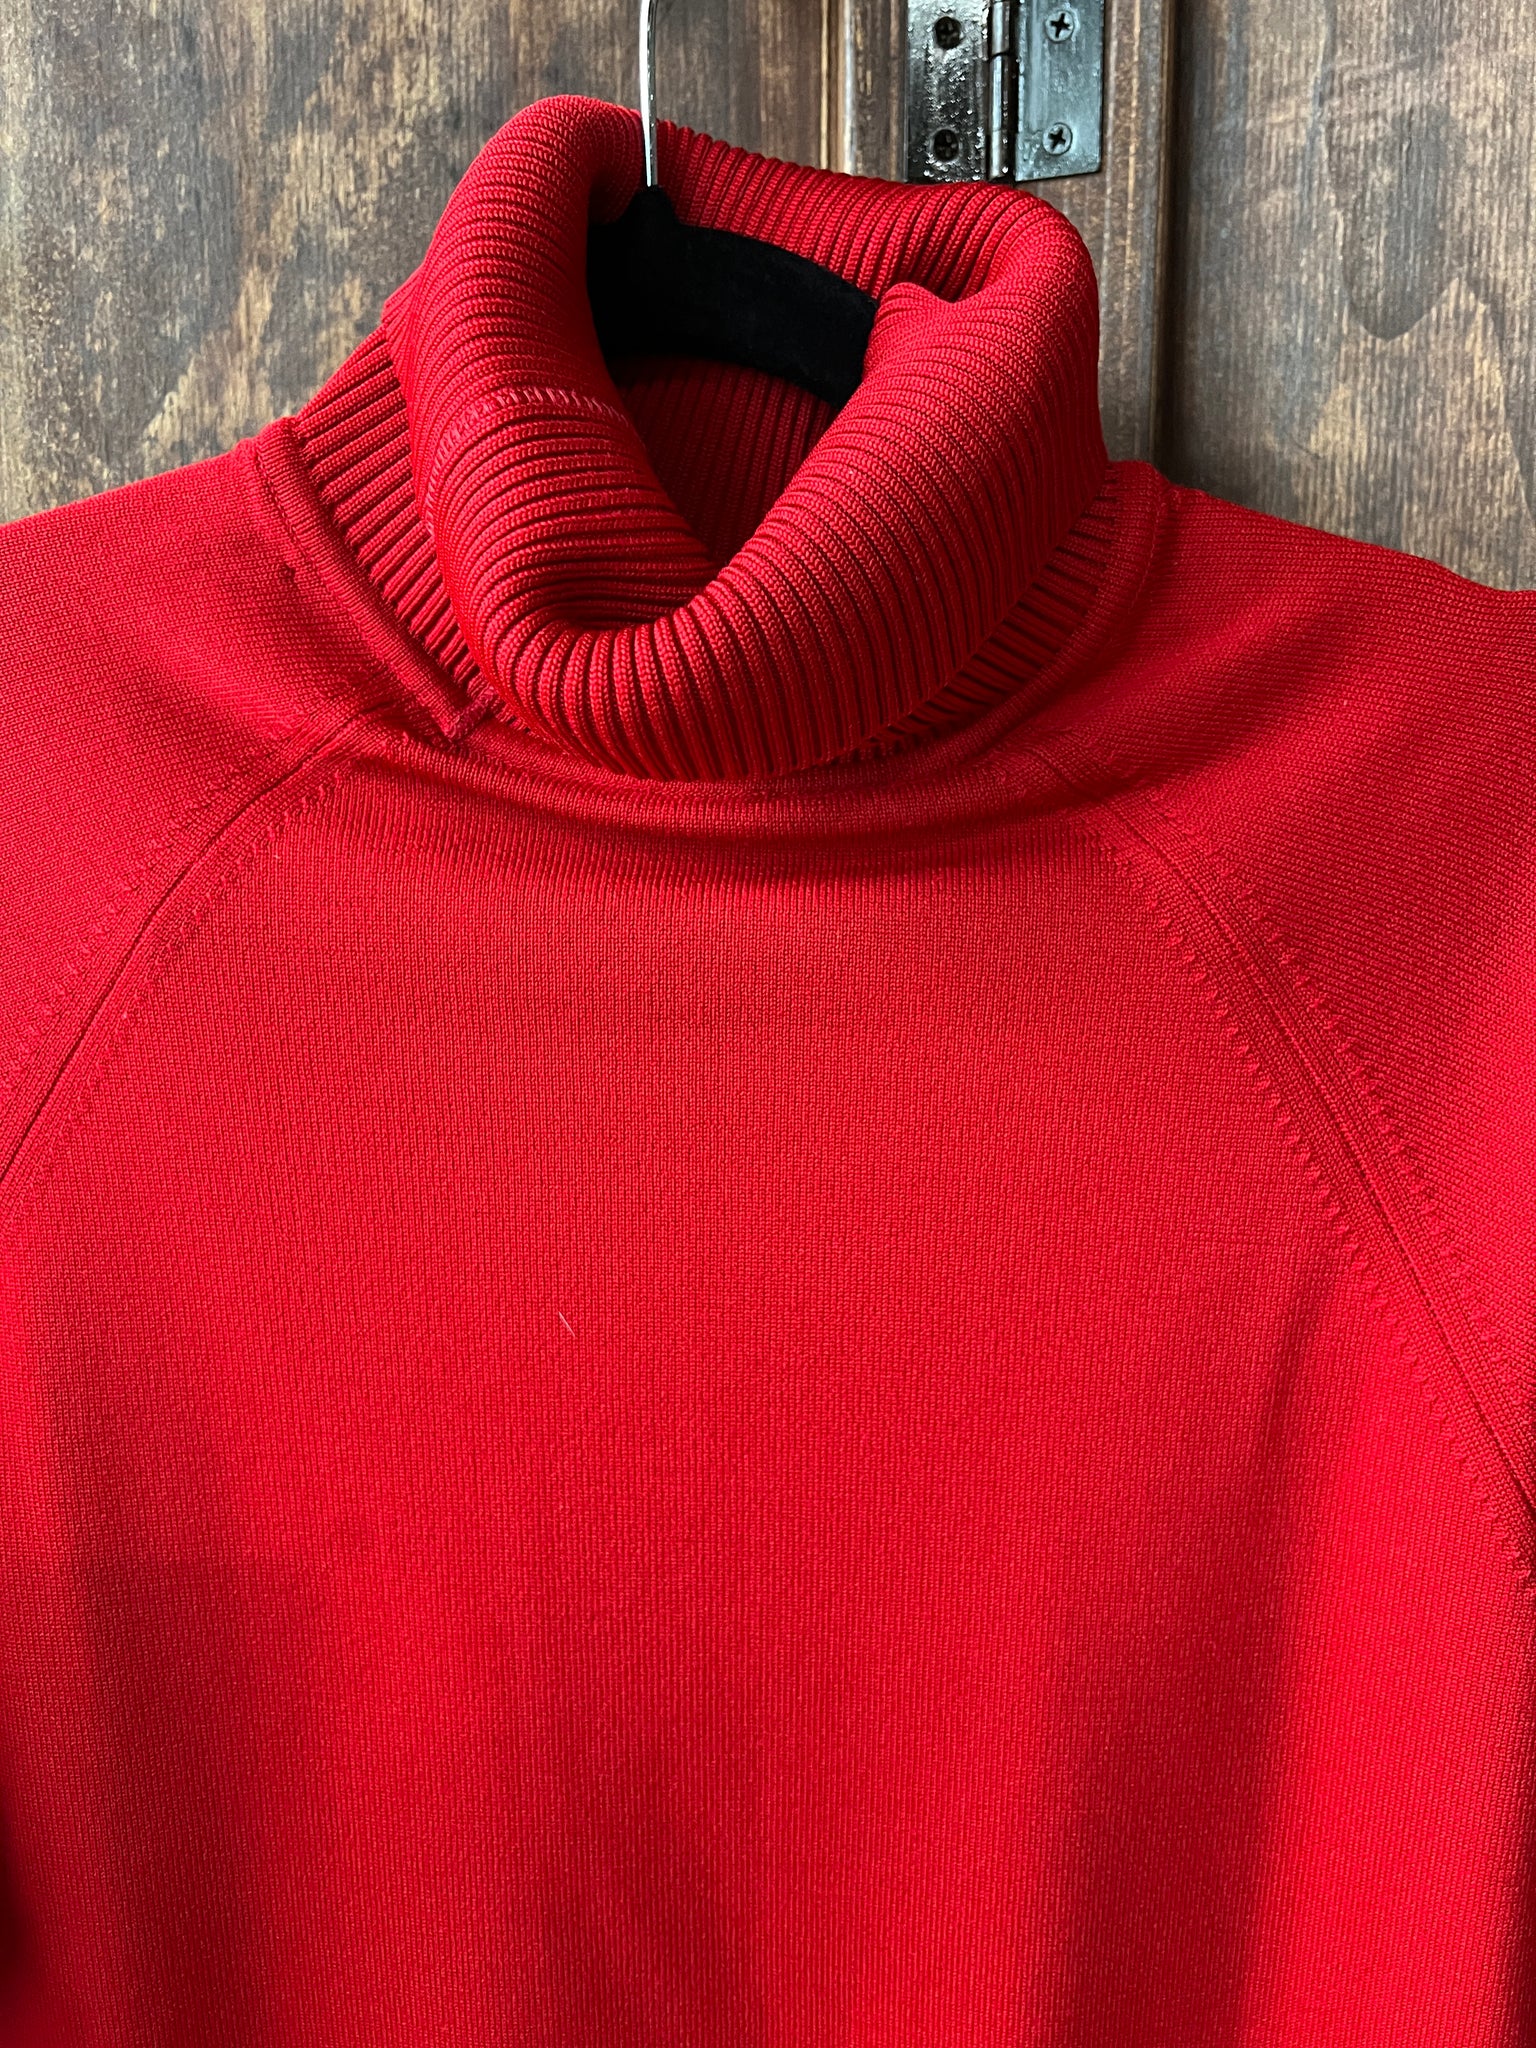 1970's TSHIRT-TURTLENECK- red poly knit ski